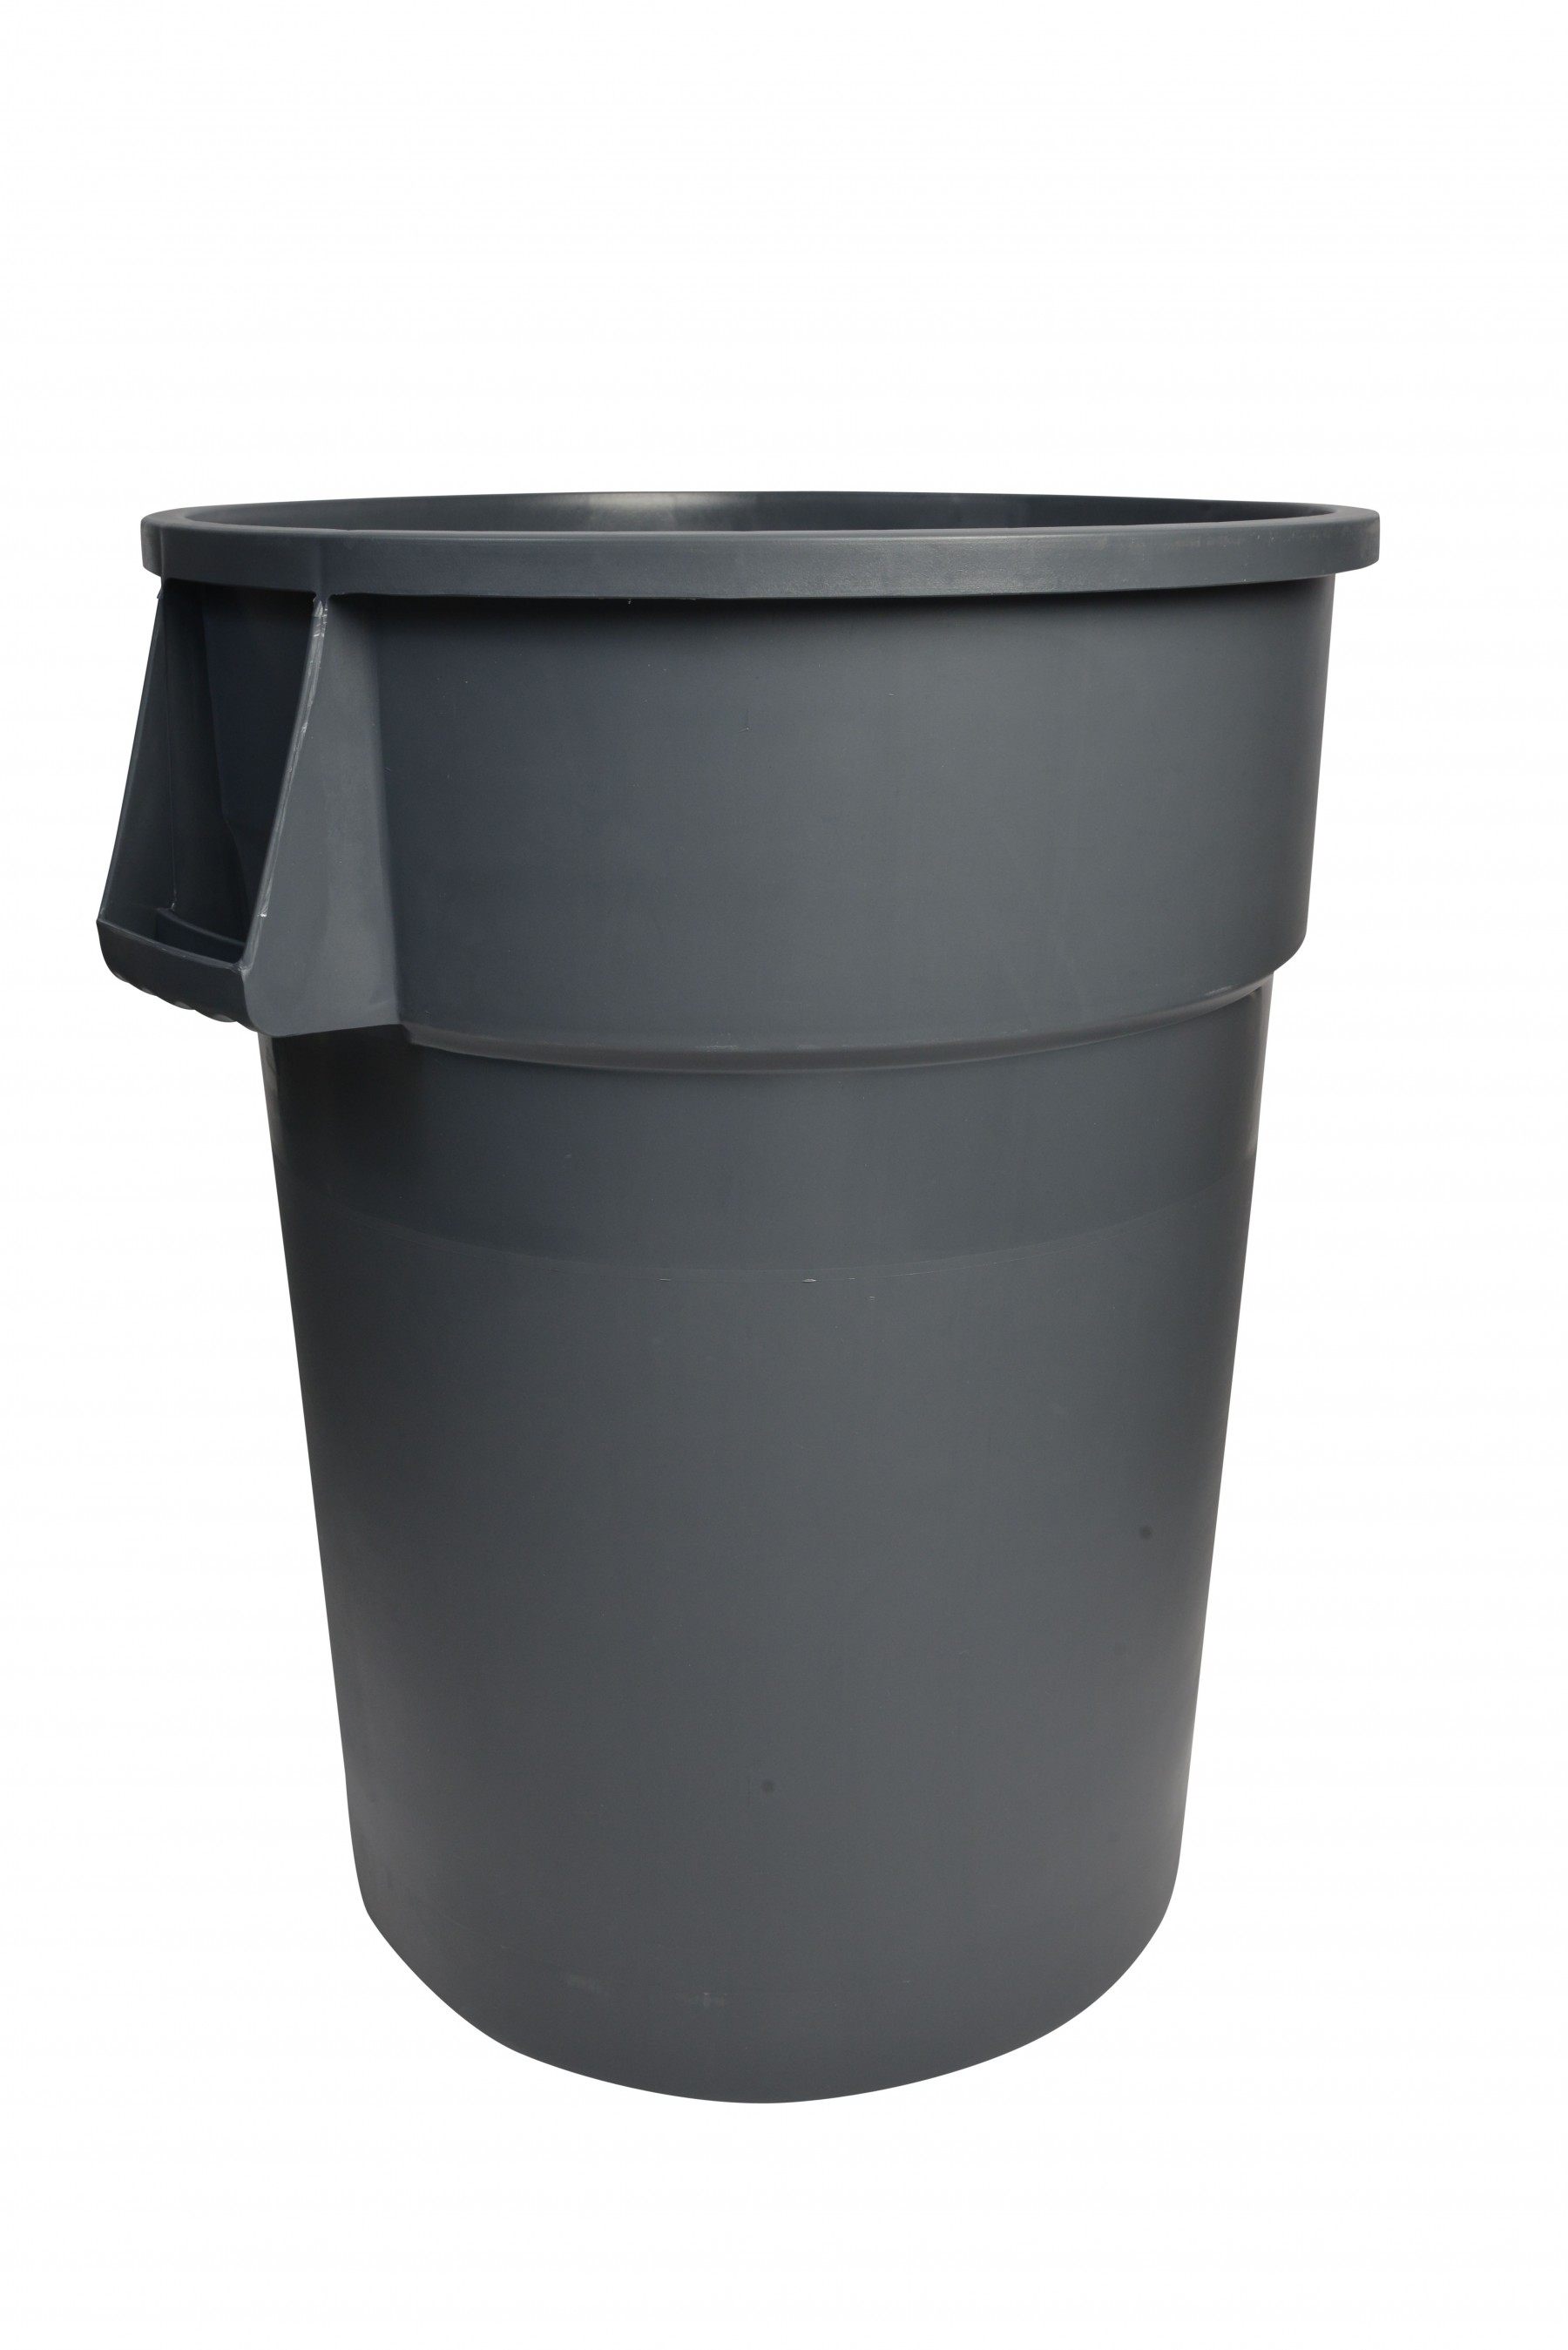 44 Gallon Grey Trash Containers (4/cs)